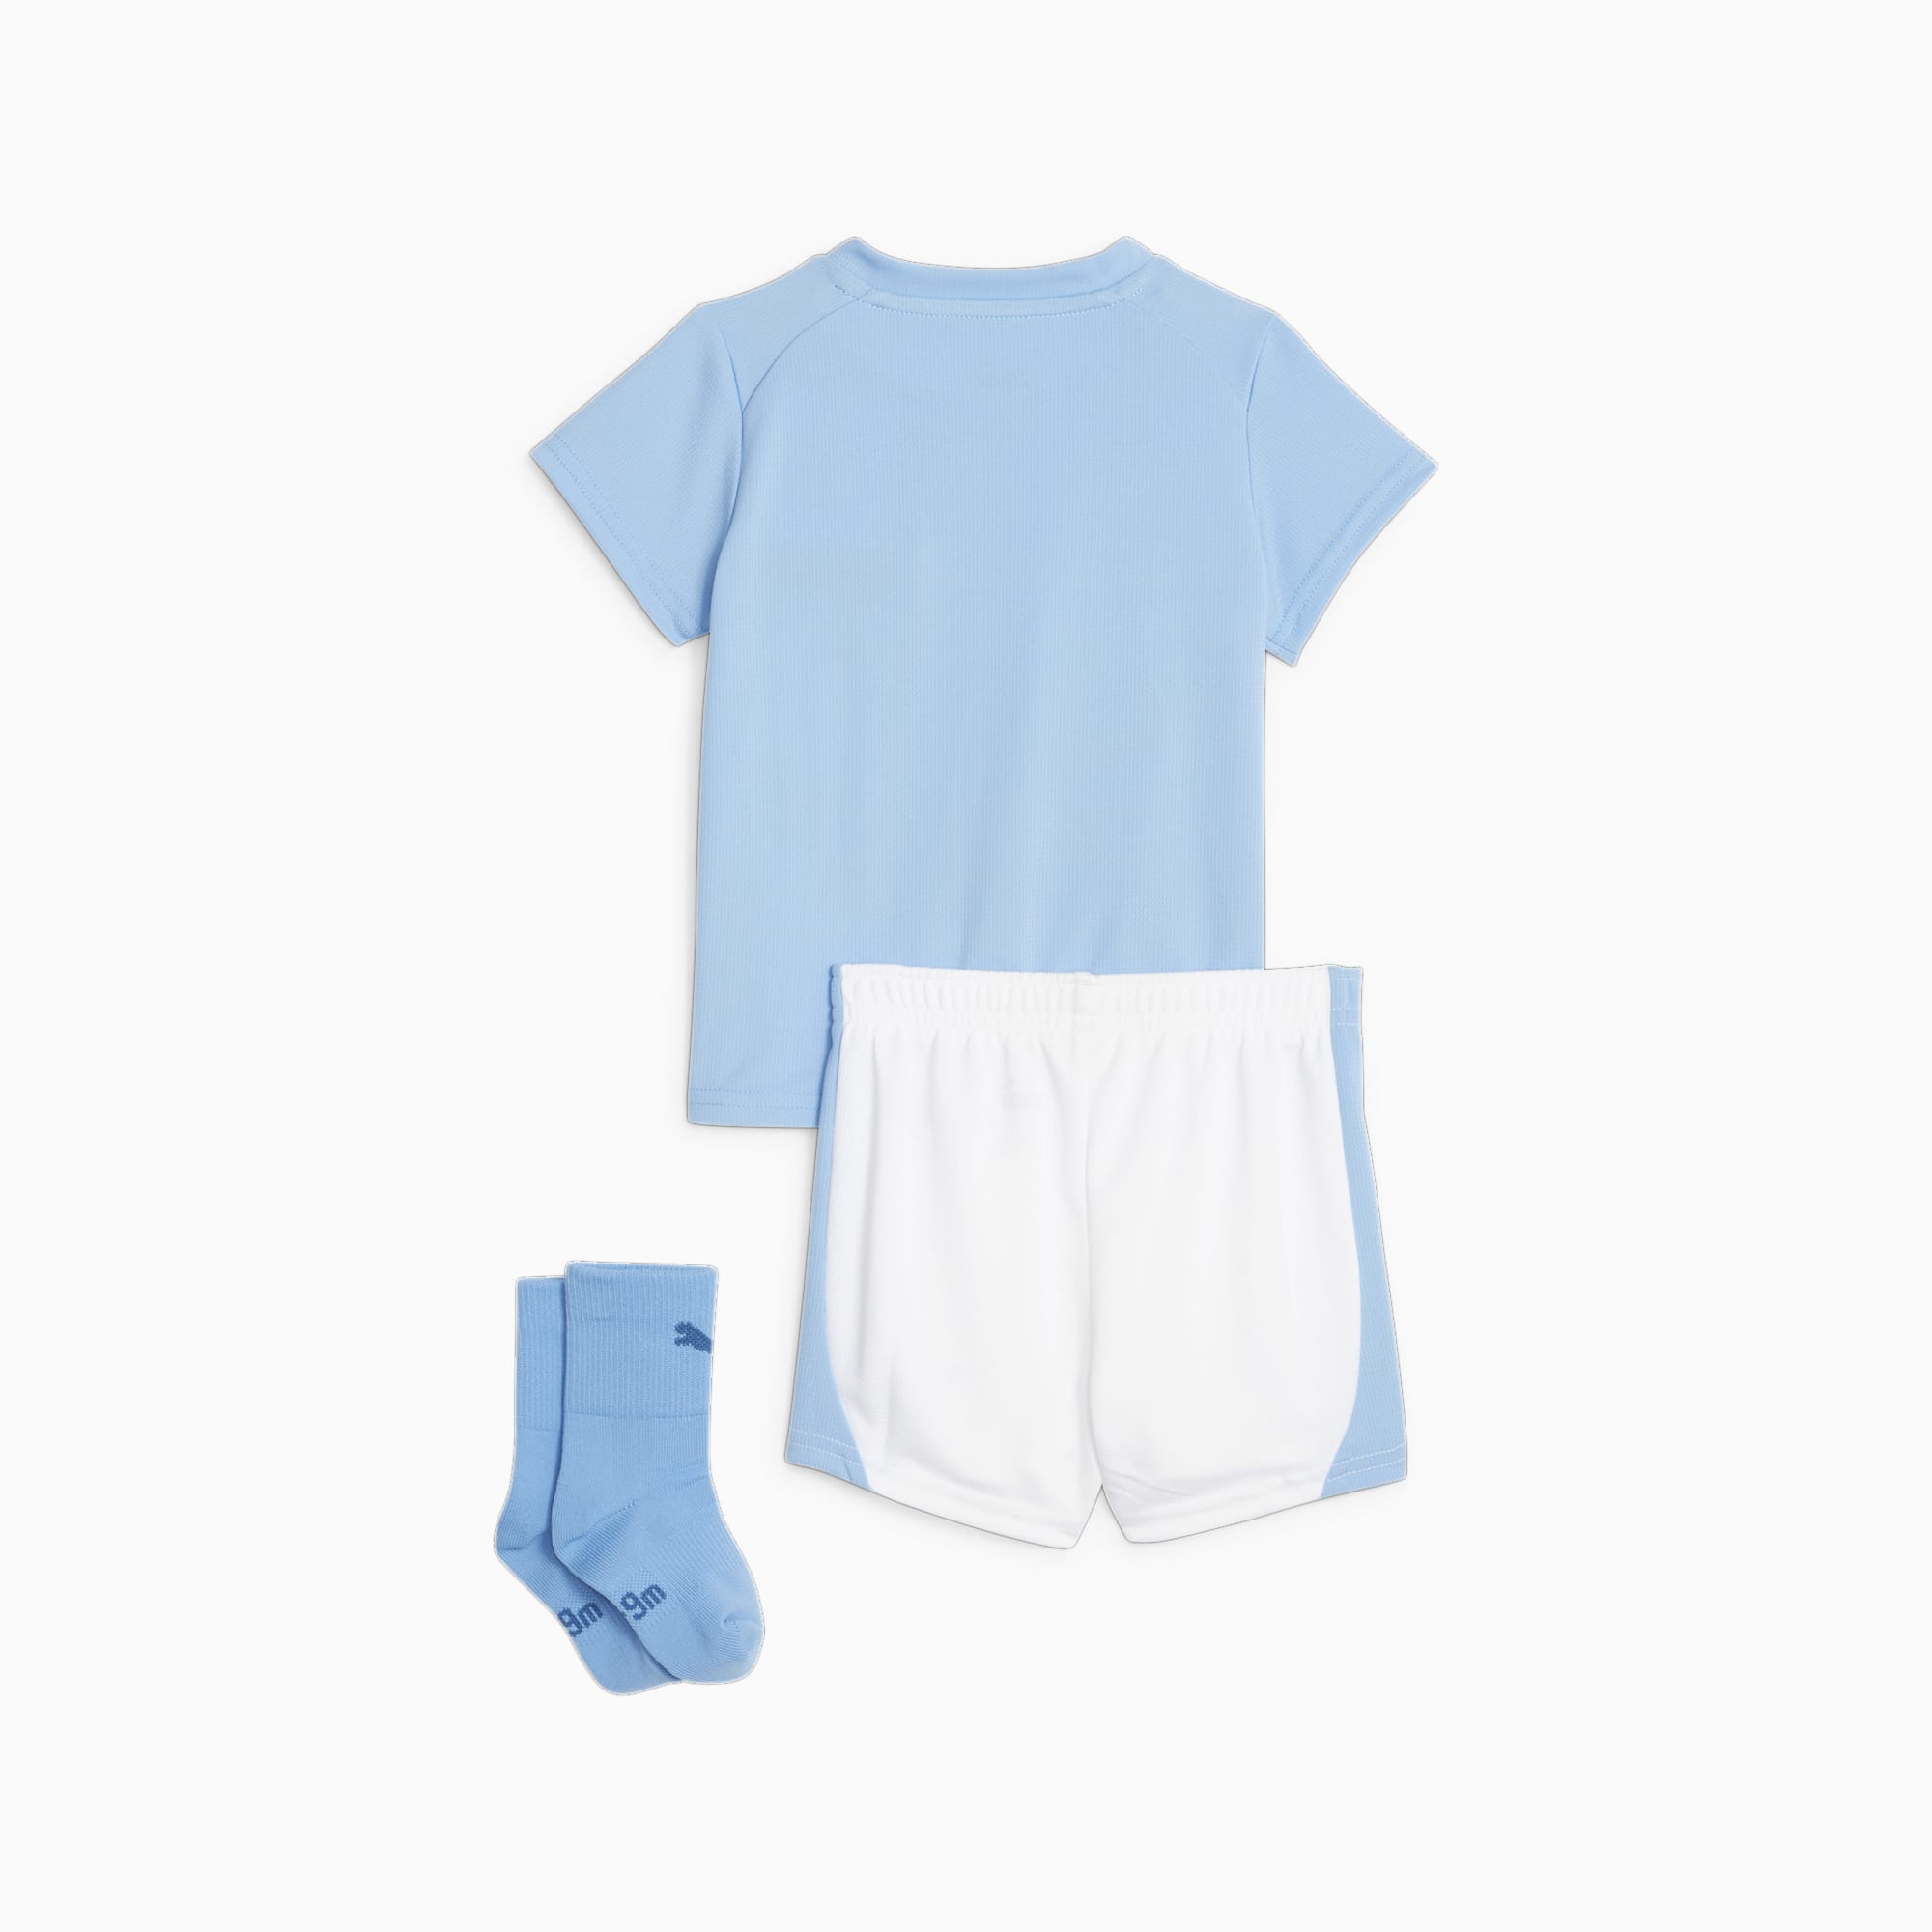 PUMA Manchester City F.C. Home Baby Kit, Light Blue/White